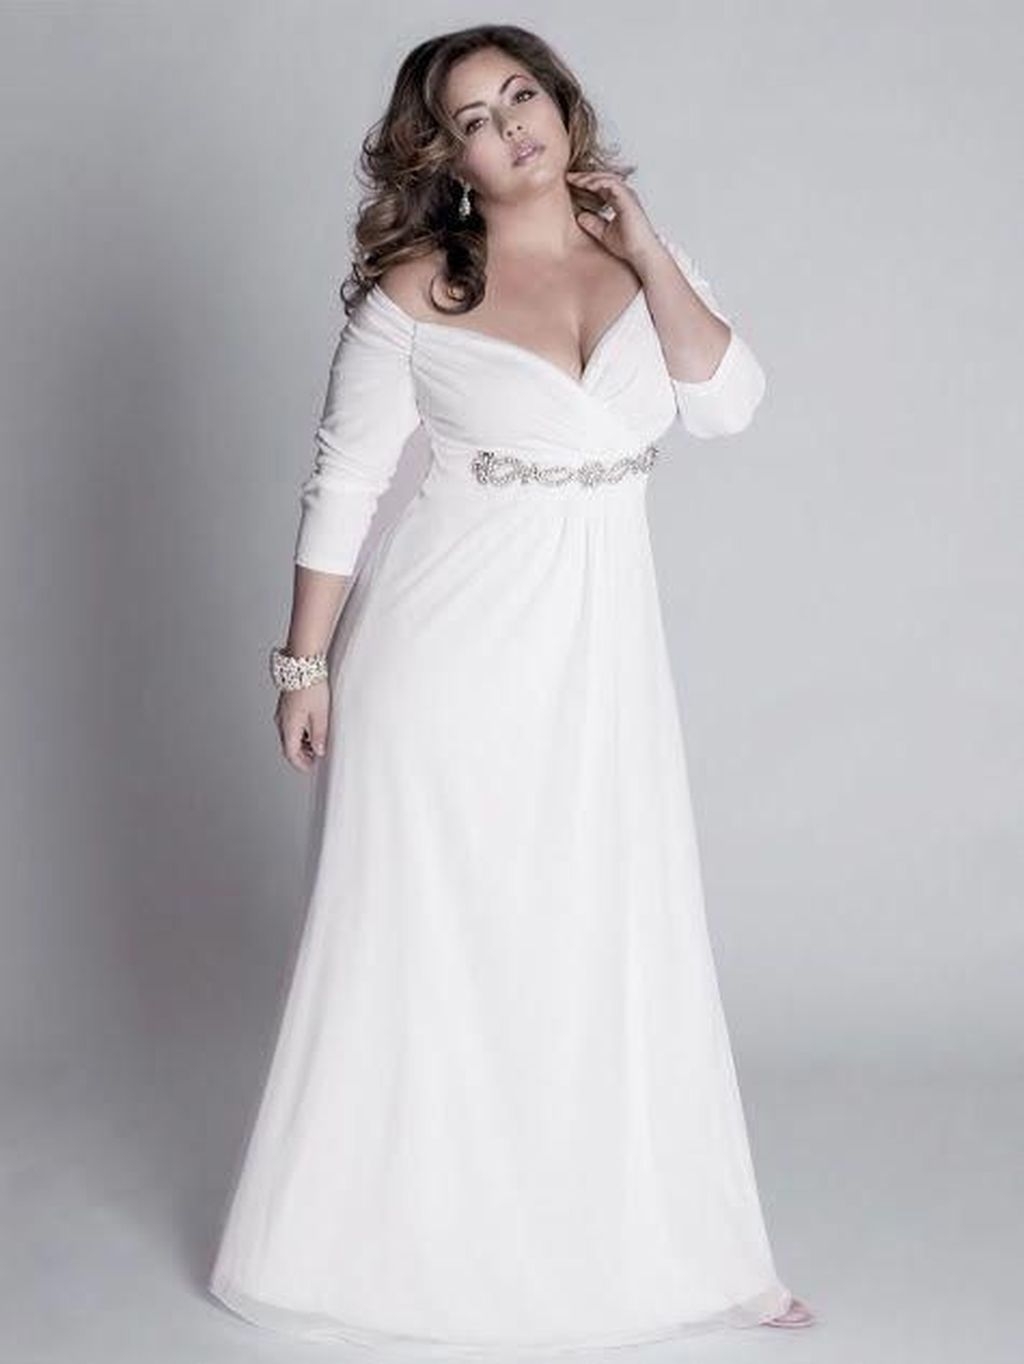 43 Perfect Winter White Dresses Ideas With Sleeves - ADDICFASHION